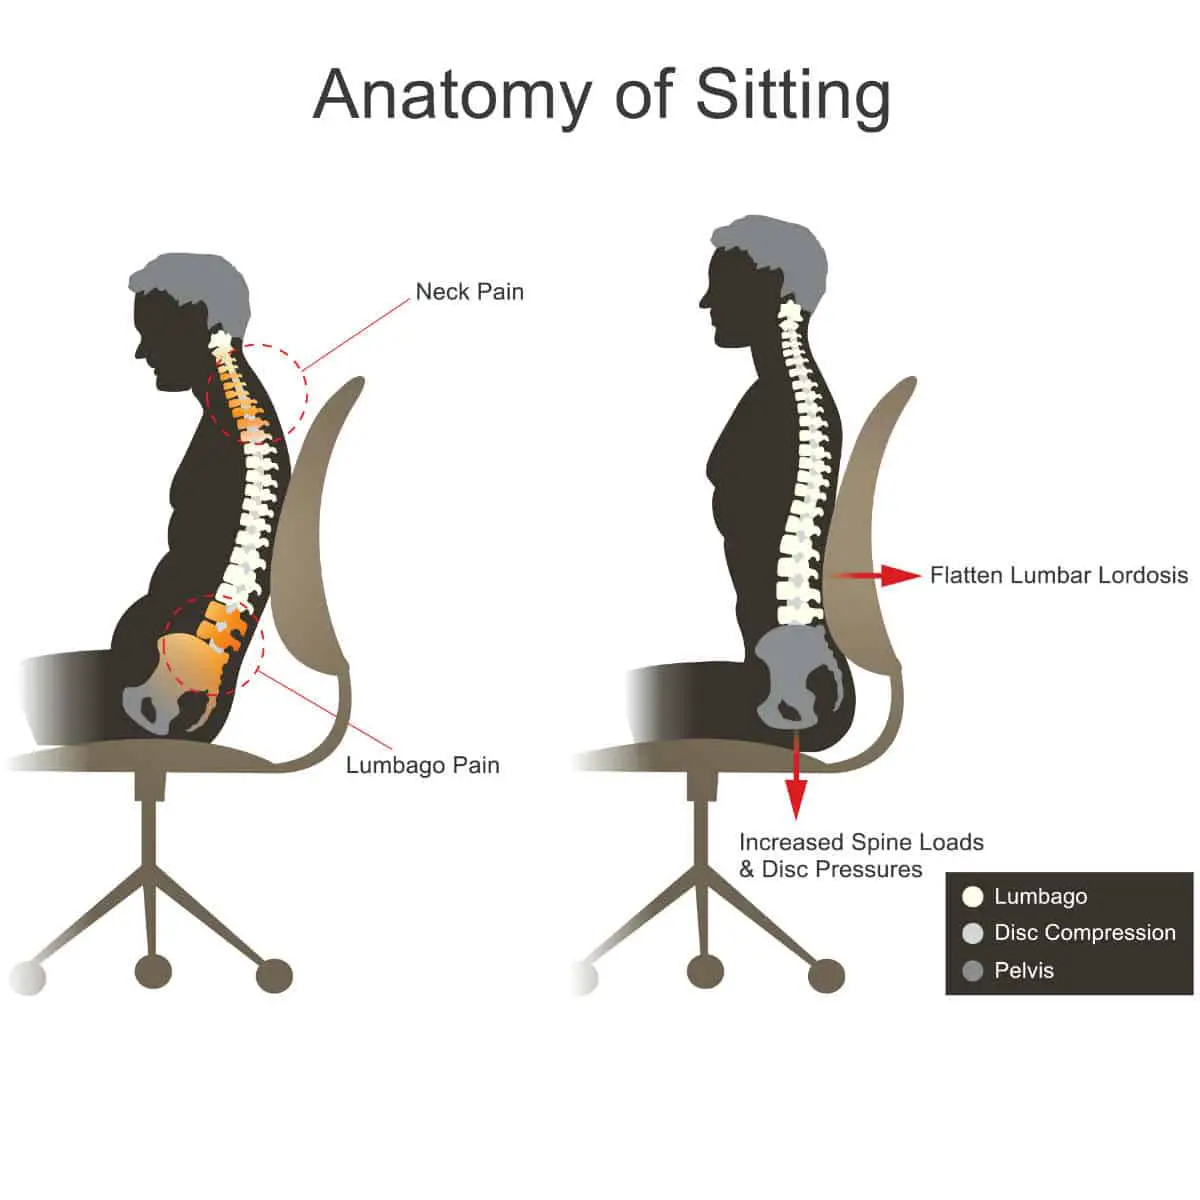 The Anatomy of sitting